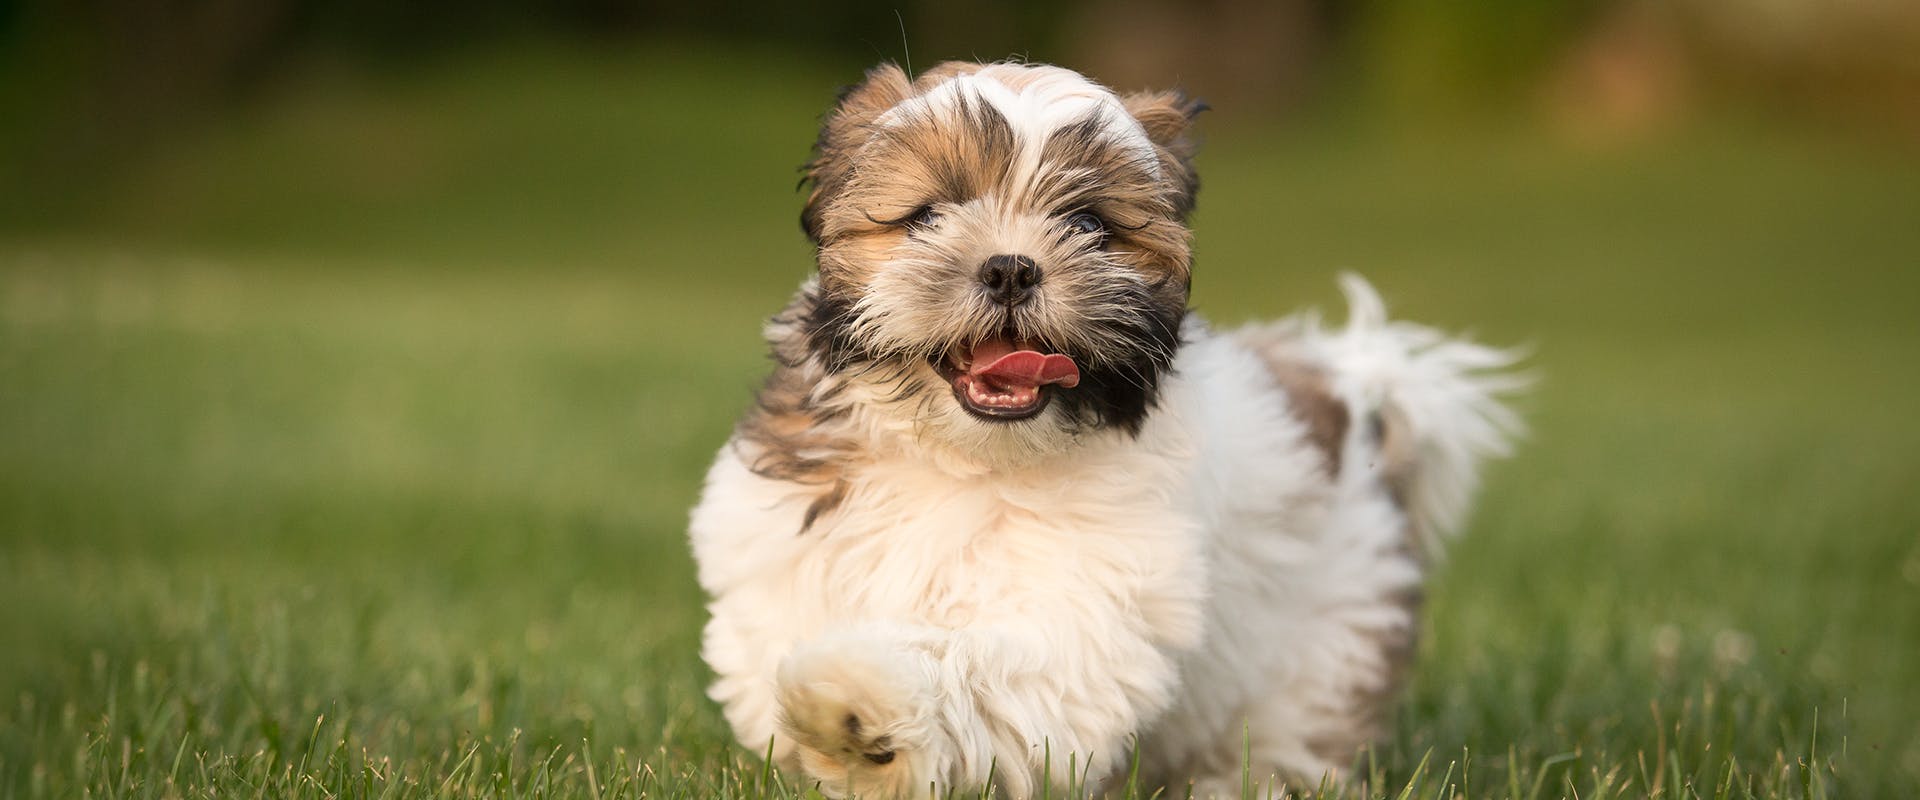 A cute Havanese puppy running through a grassy field